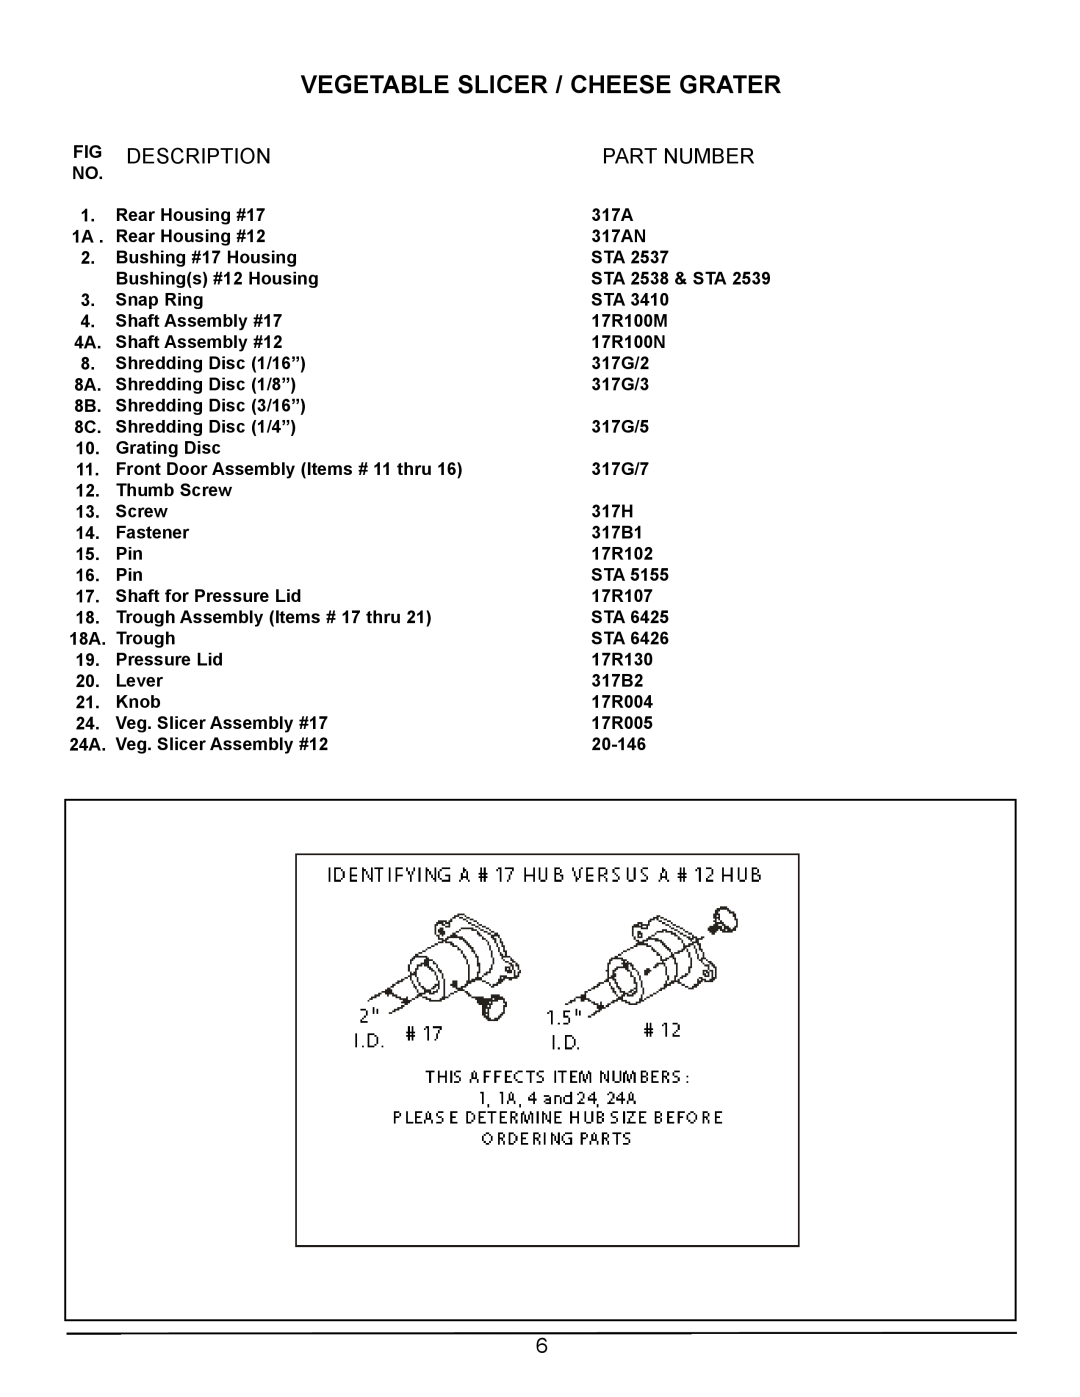 Varimixer 317AN operation manual Vegetable Slicer / Cheese Grater, Description, Part Number 